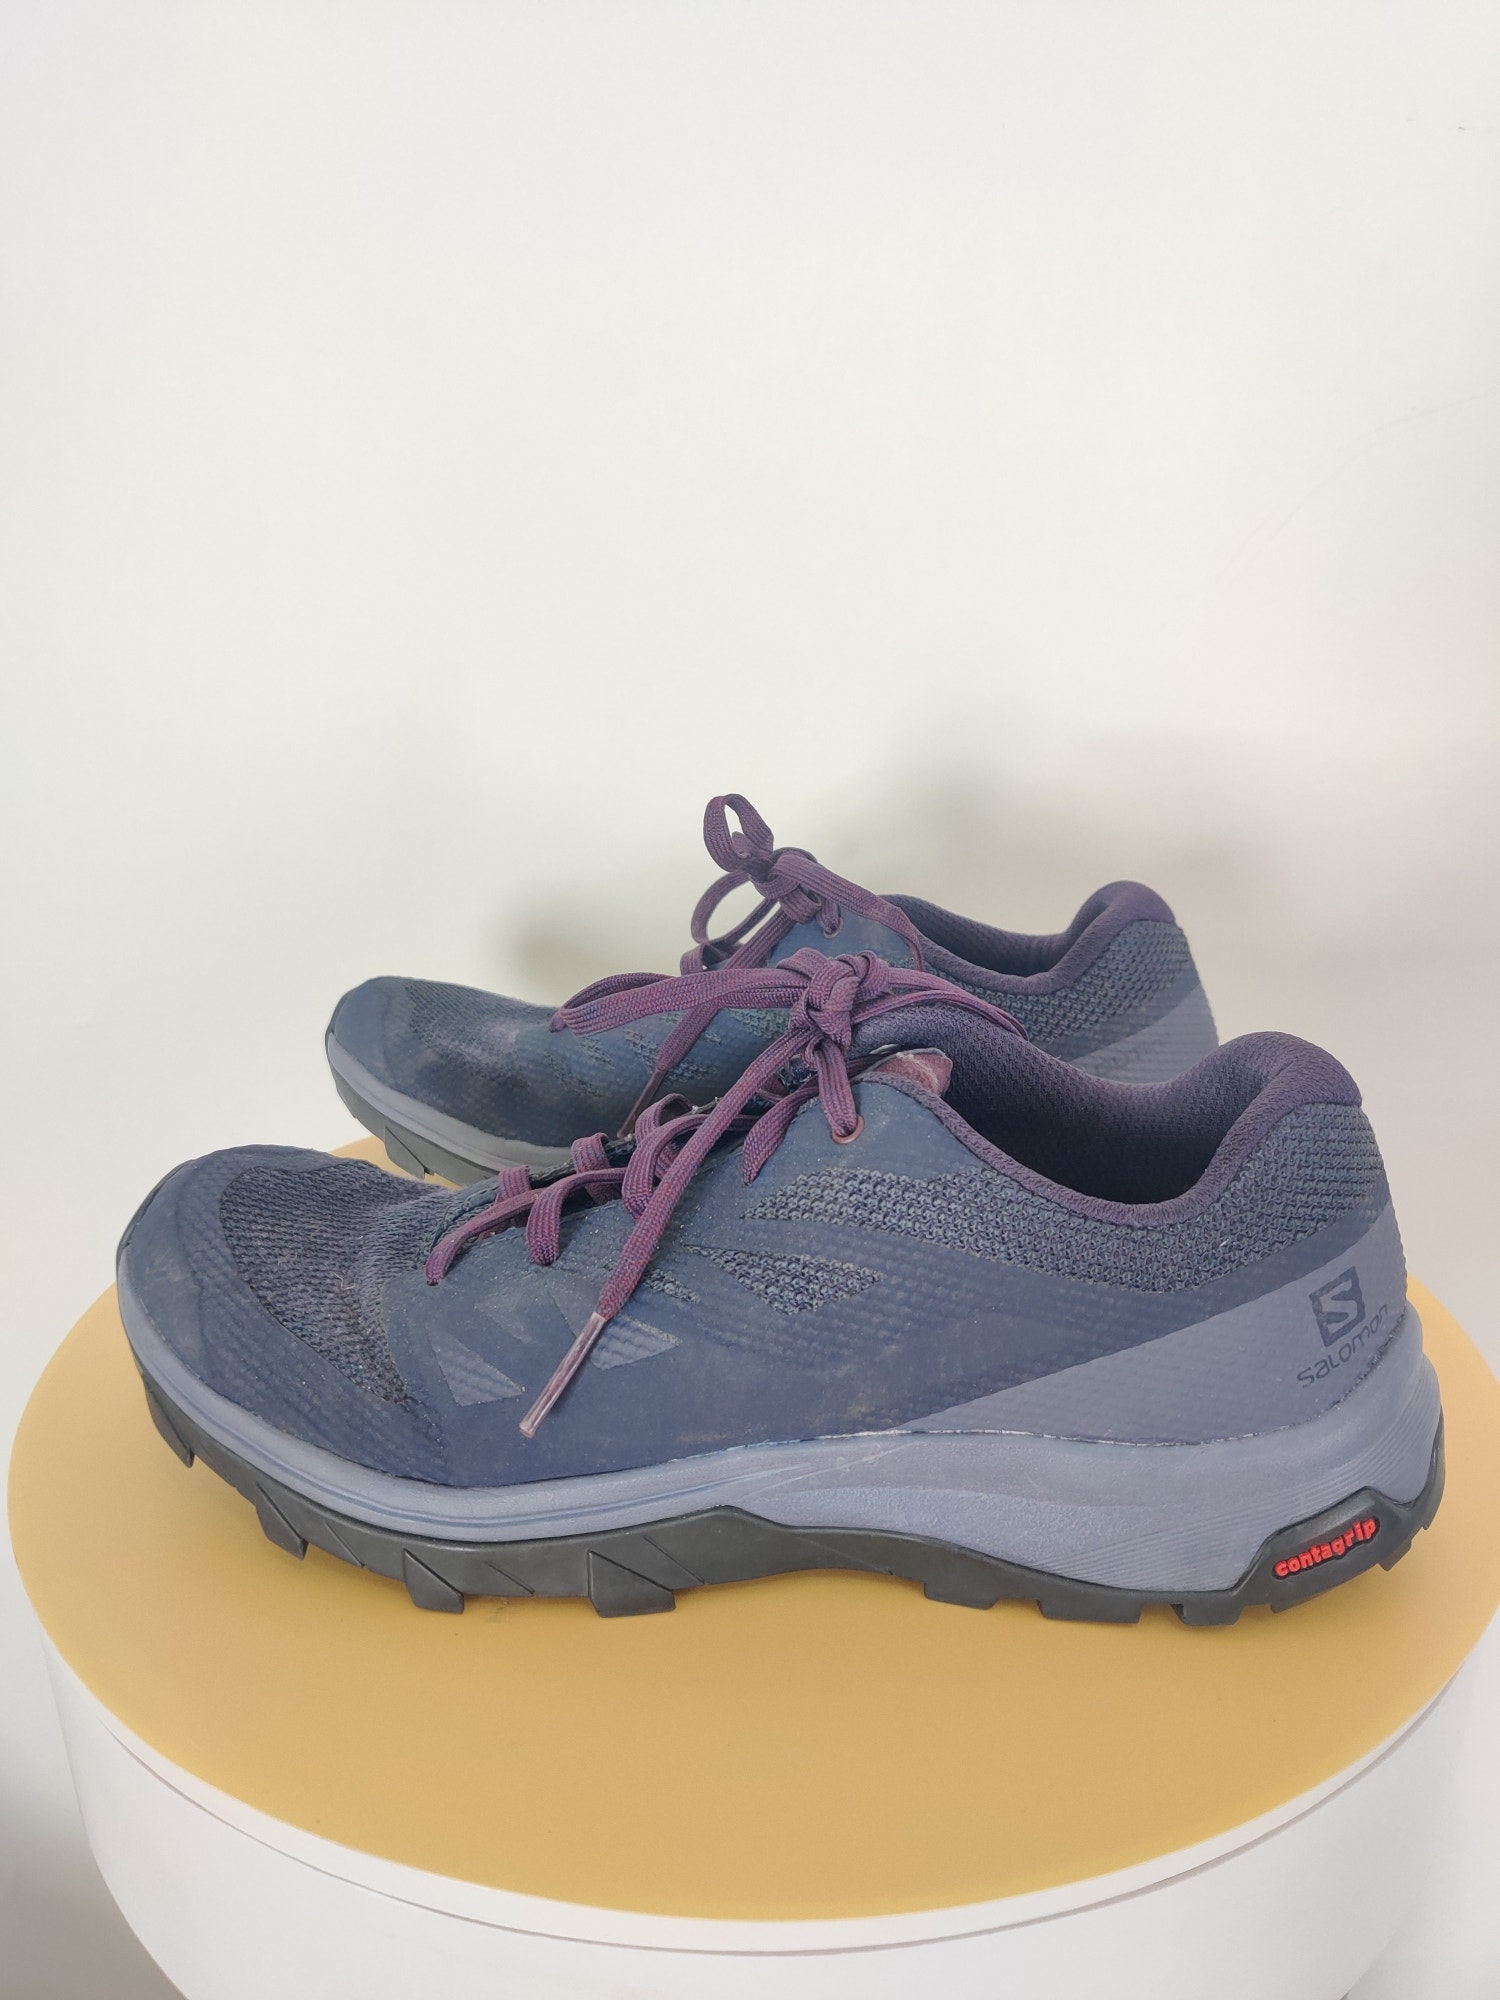 (V) Salomon Women shoes sandals hiking running sport purple contagrip sz 8 - Picture 6 of 12